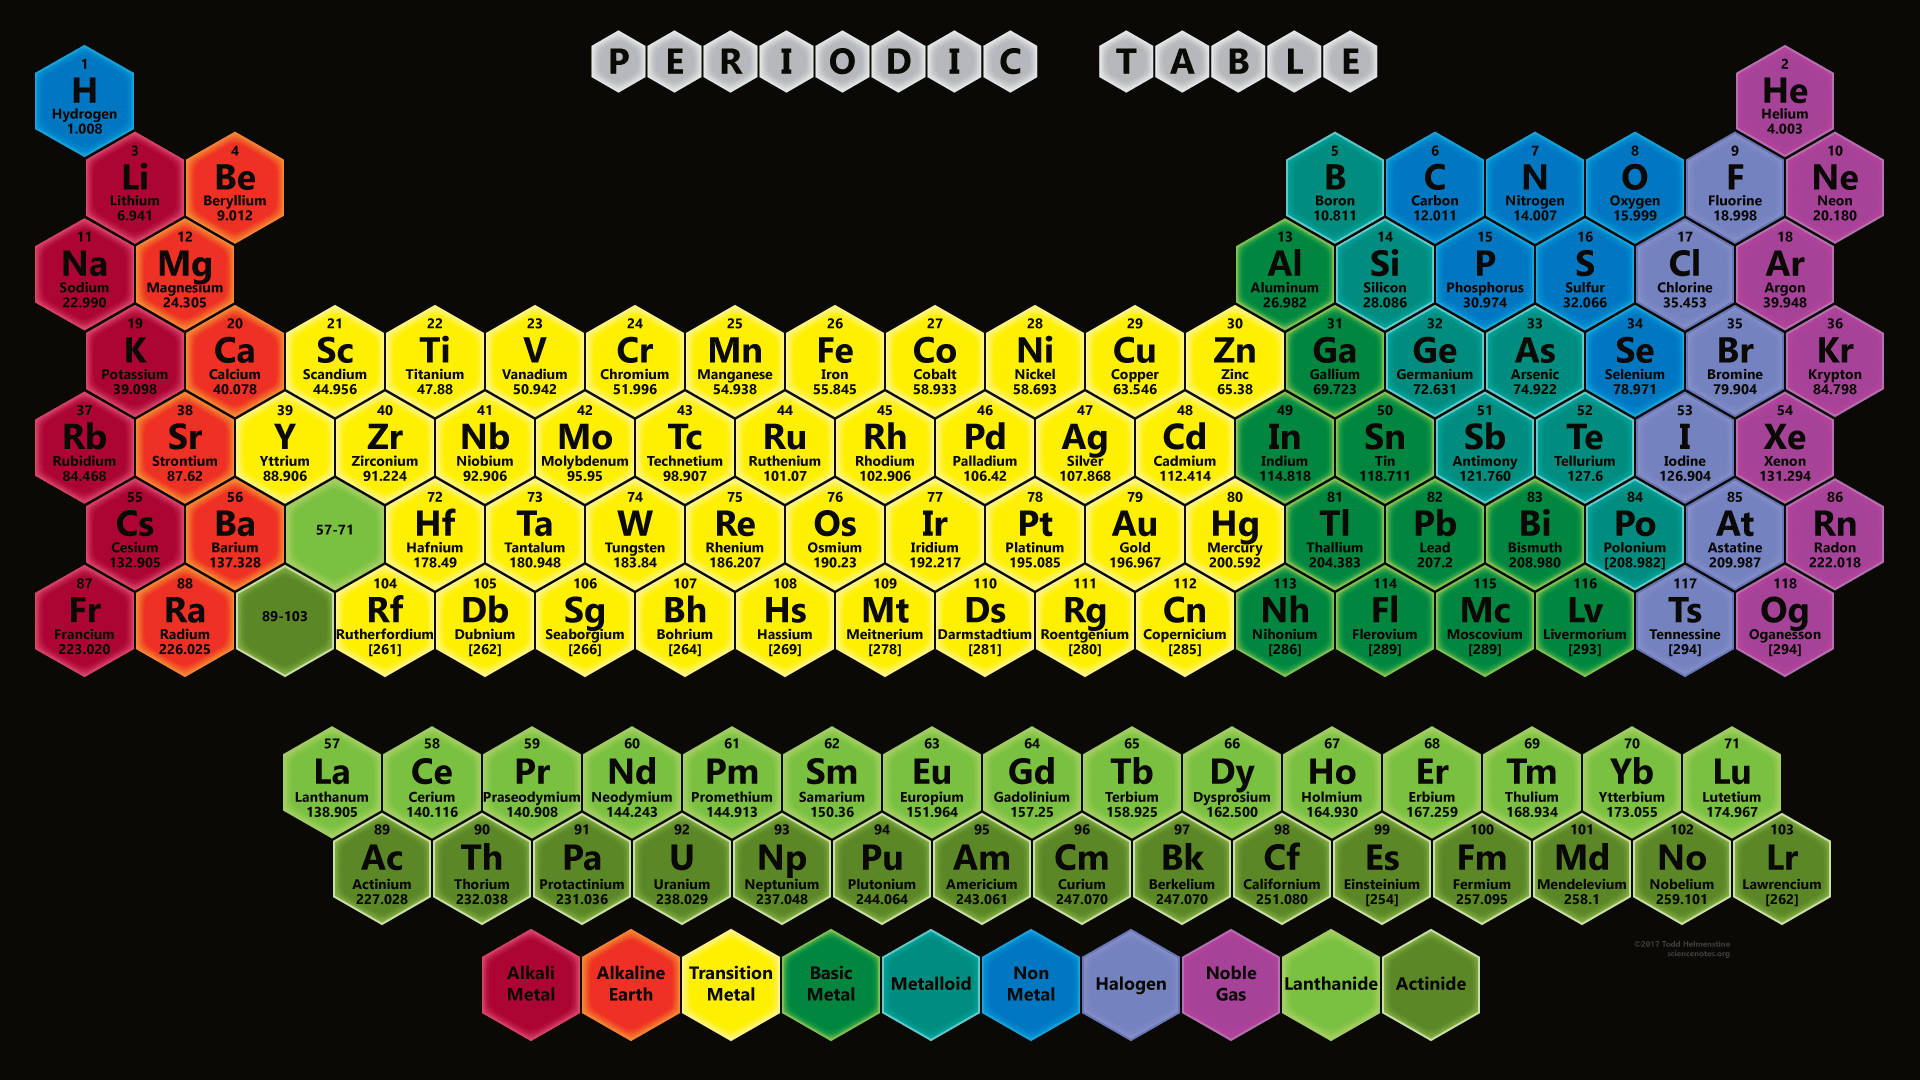 Colorful Hexagonal Periodic Table Design Wallpaper